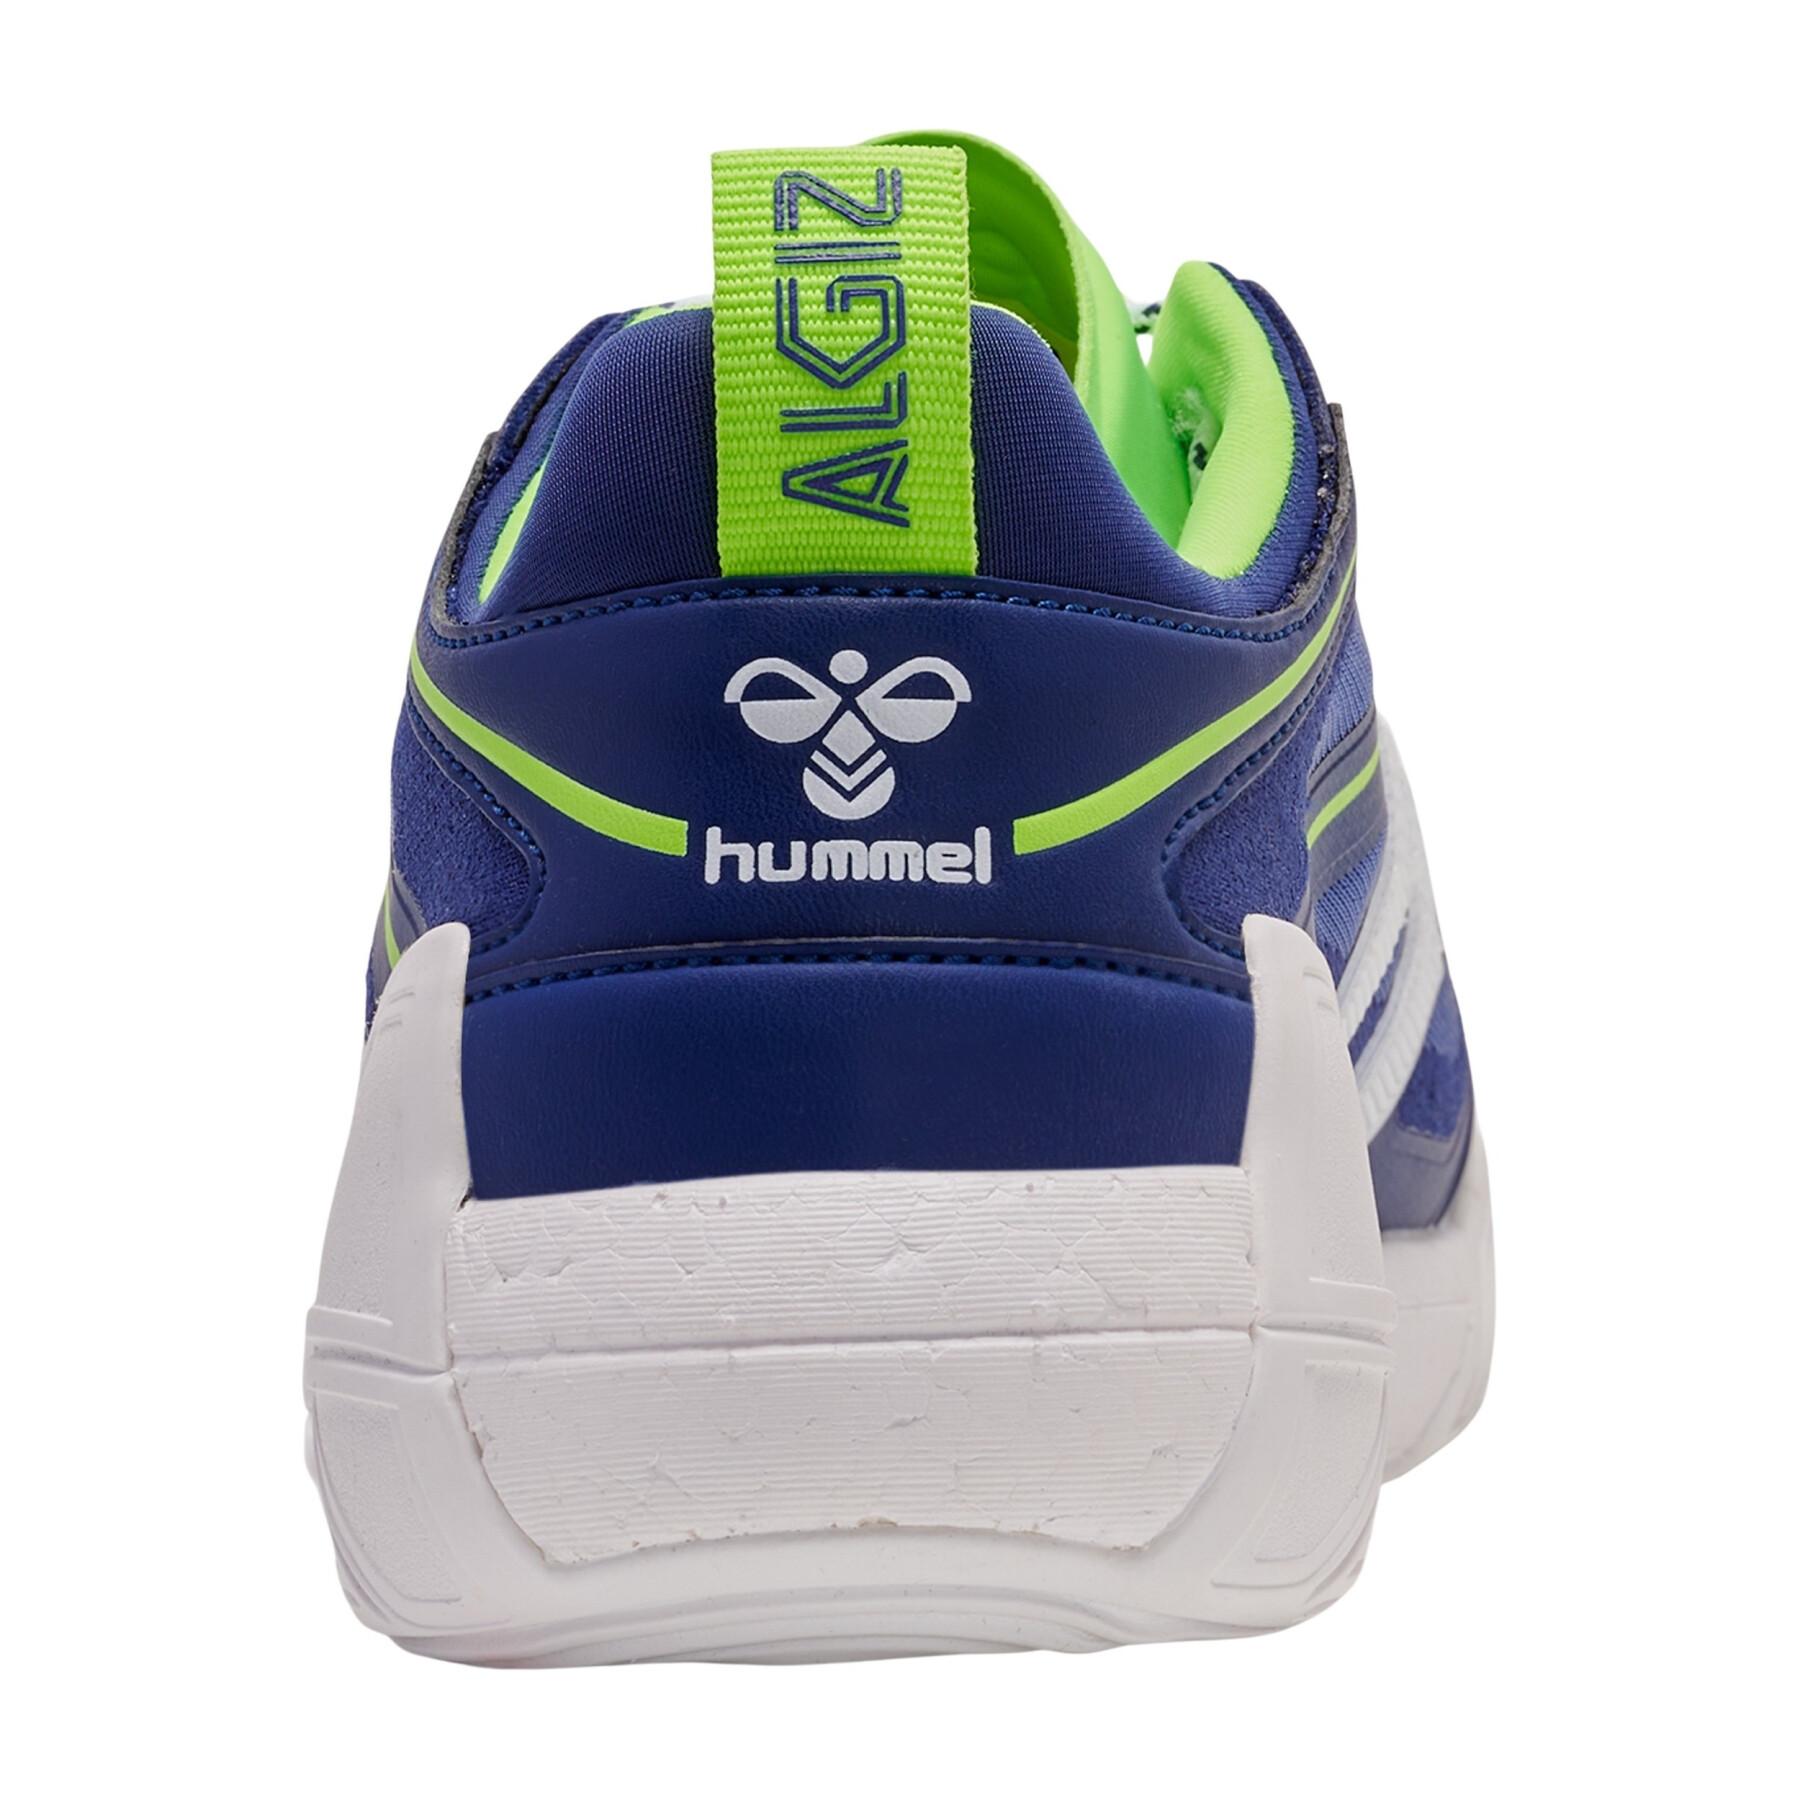 Handball shoes Hummel Algiz 2.0 Lite